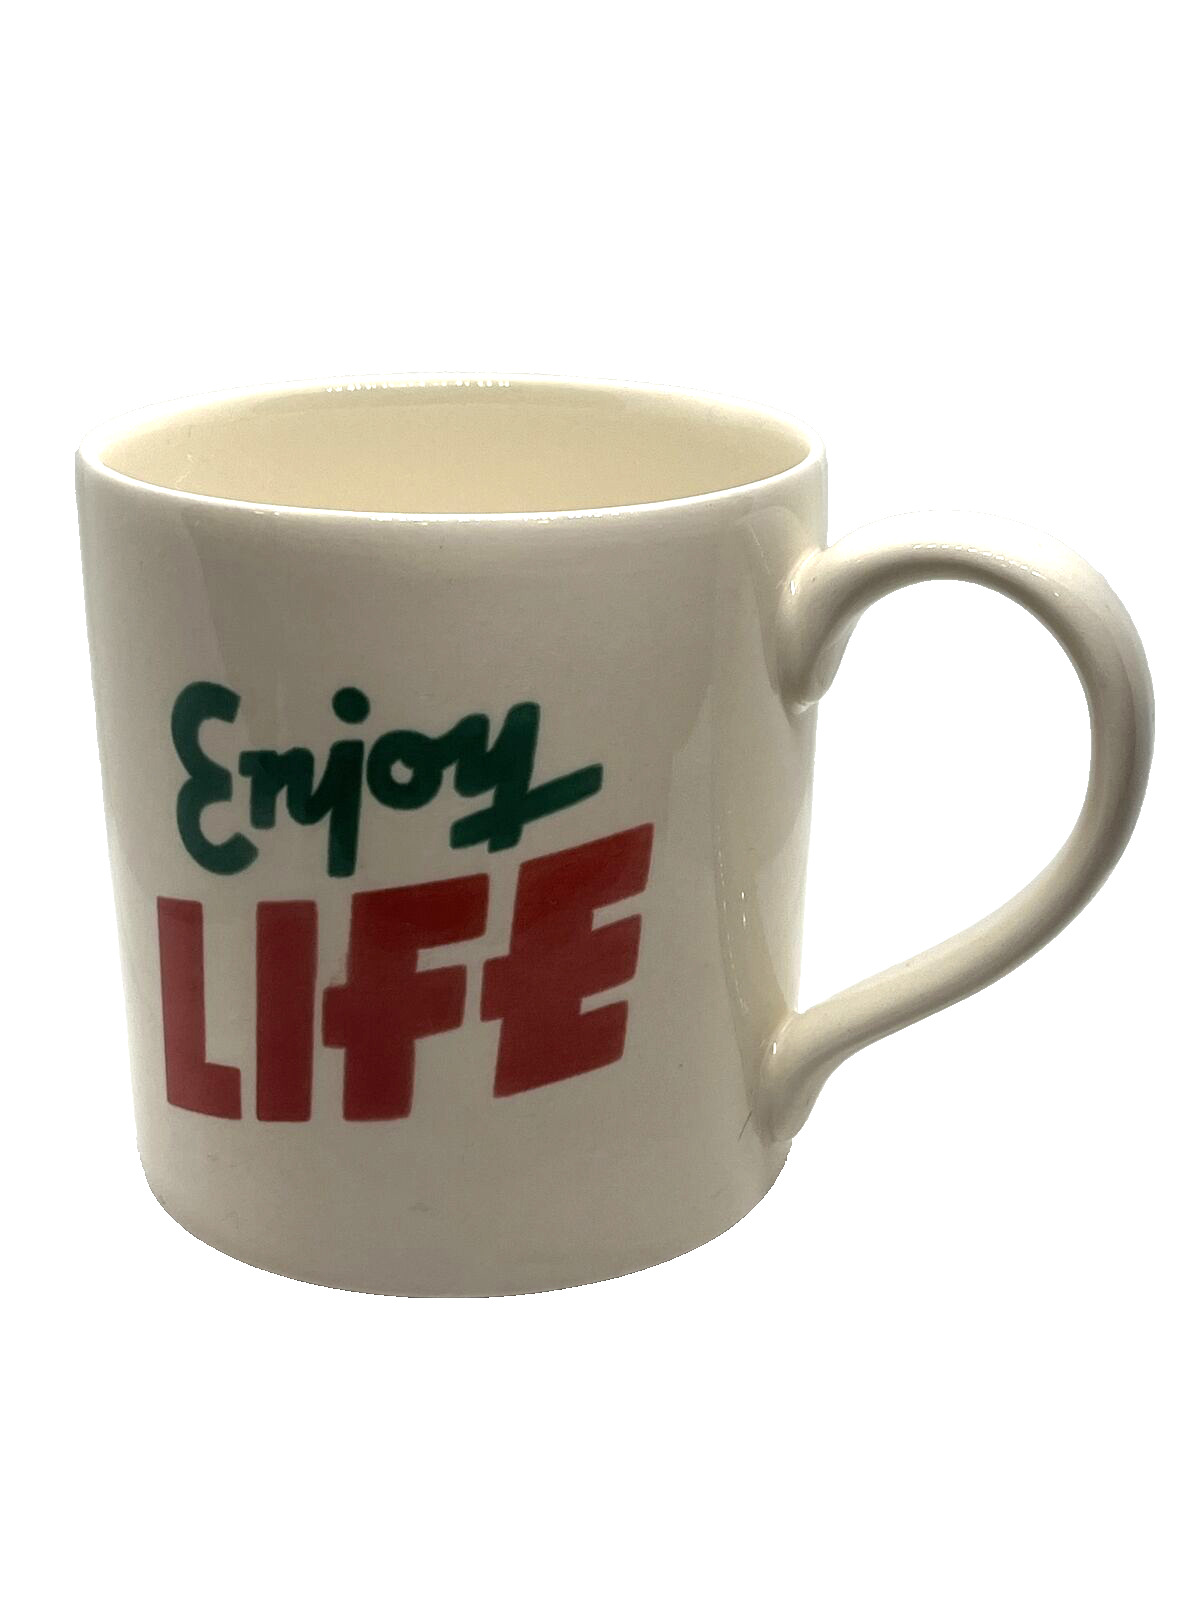 Fishs Eddy - Enjoy Life Ceramic Mug - Made in England Rare Collectable